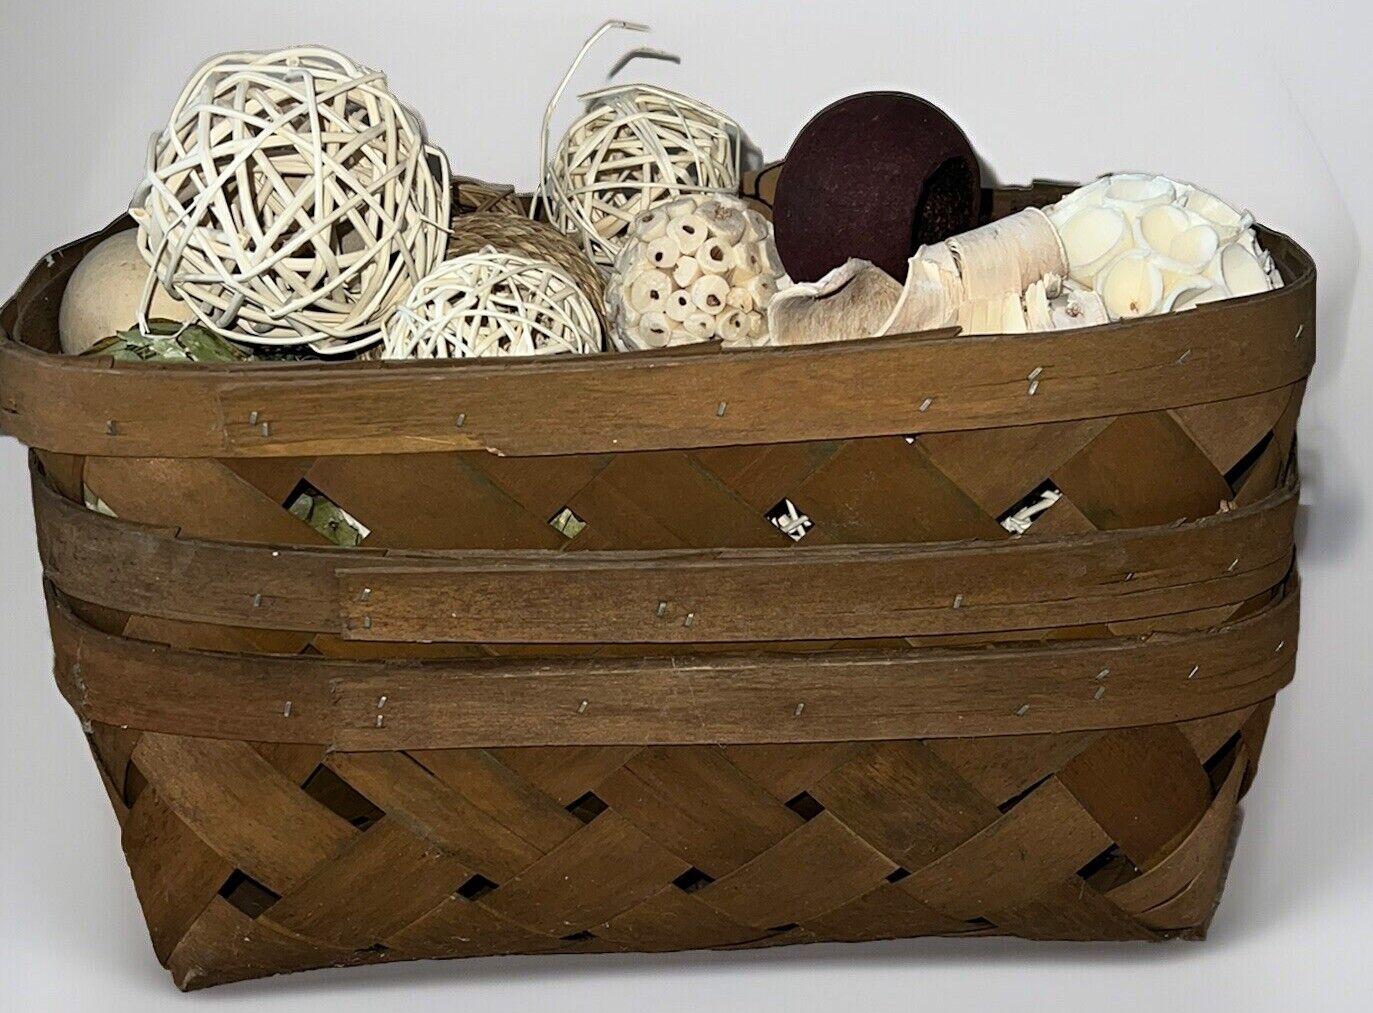 Vintage Decorative Basket with Assorted Natural Elements